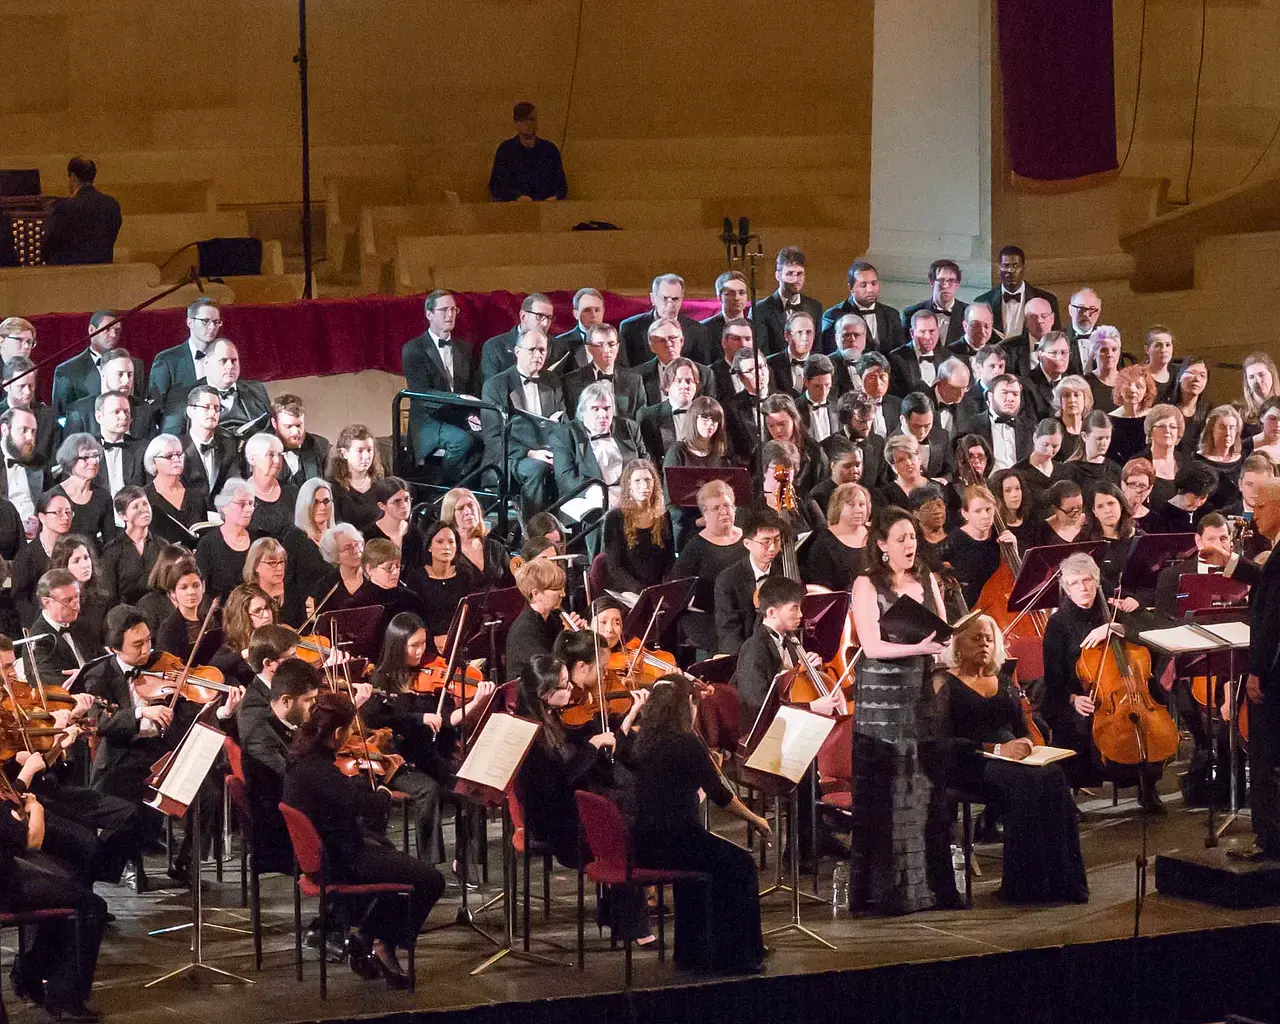 The Mendelssohn Club of Philadelphia performing St. Matthew Passion. Photo by Sharon Torello.